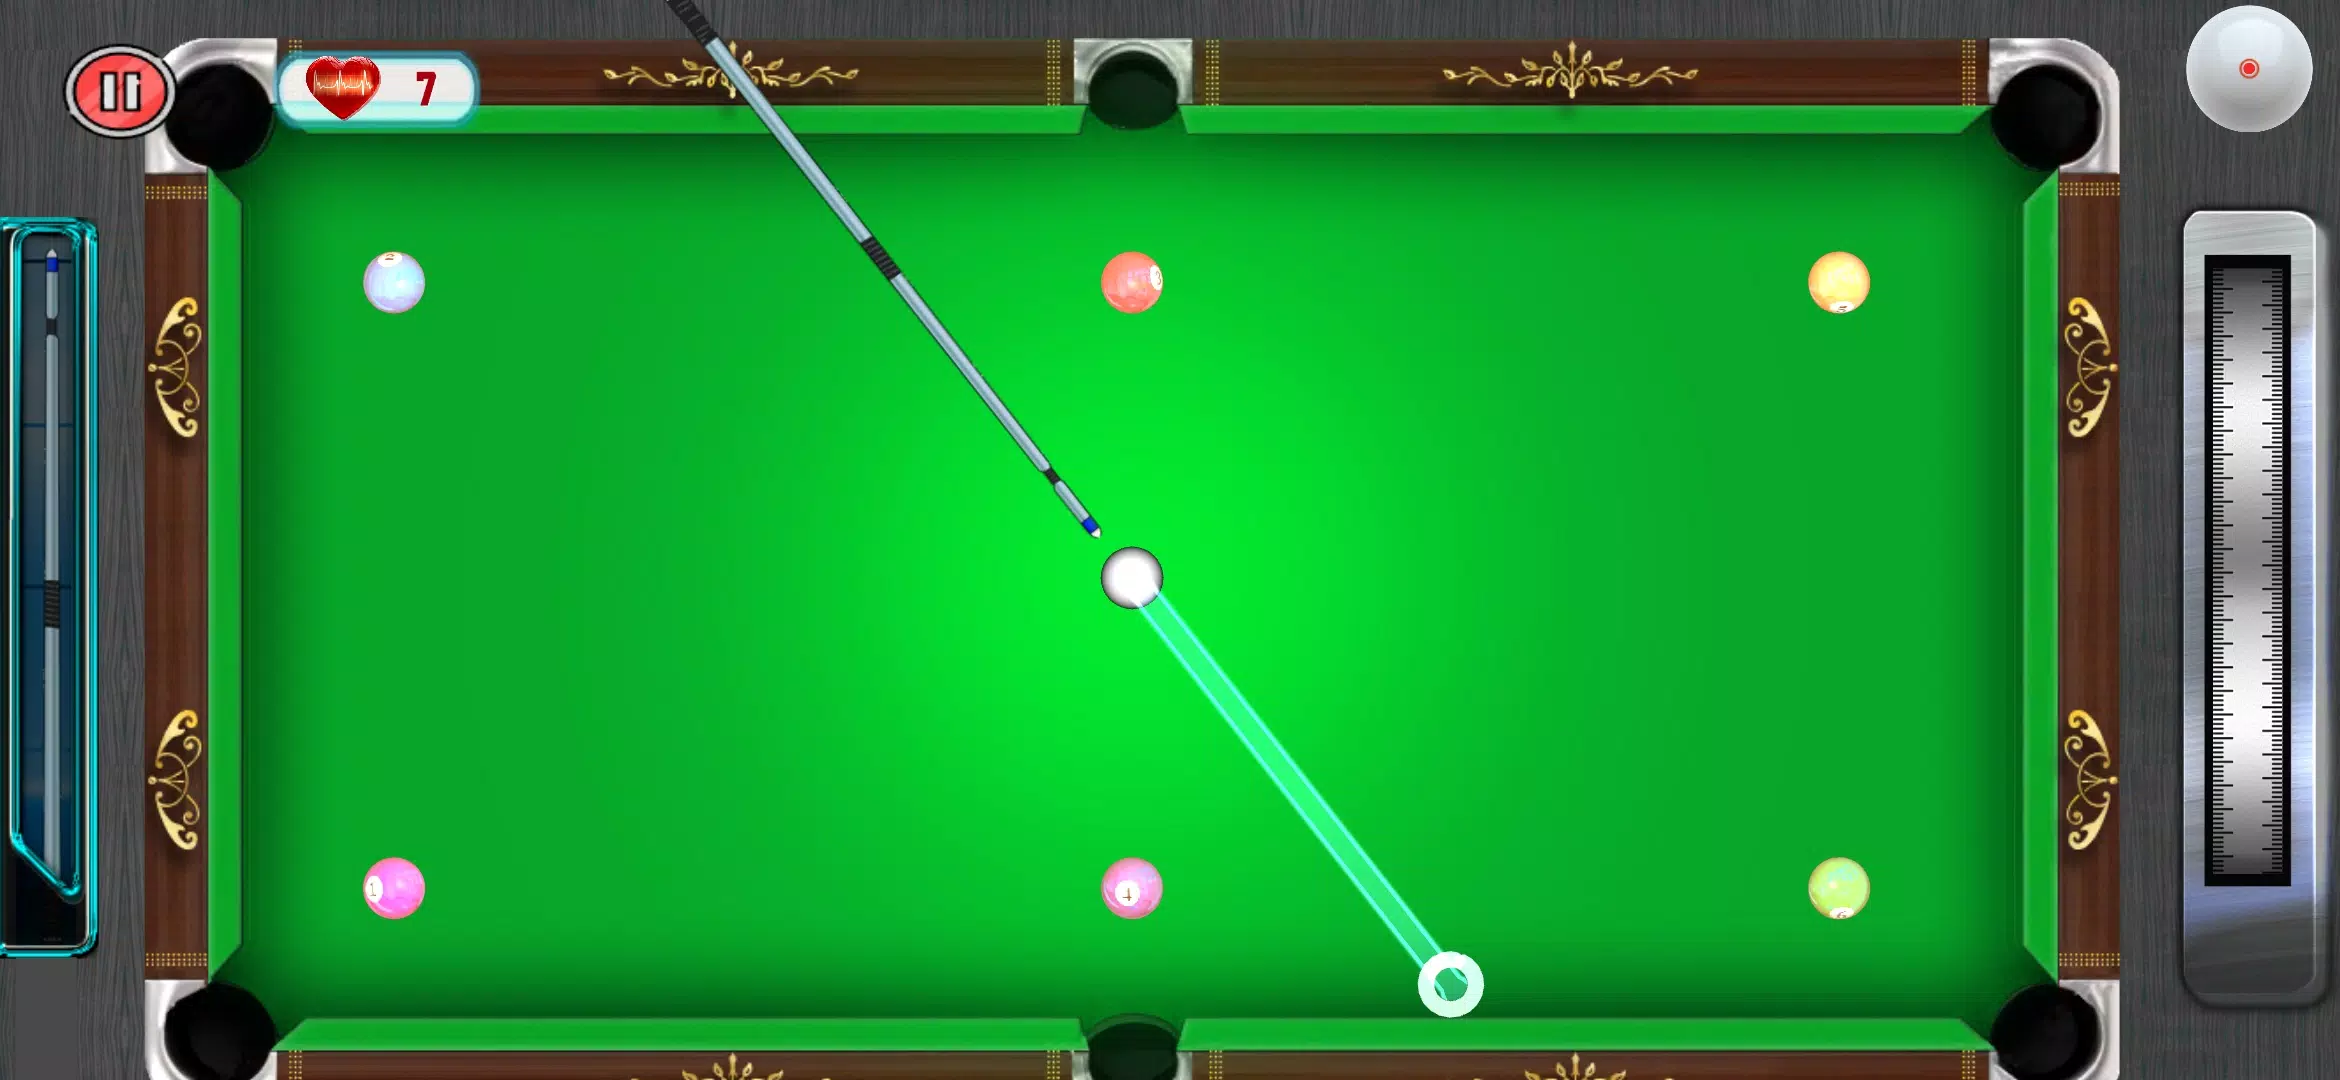 8 Ball Pool Blast - Billiard Games APK pour Android Télécharger